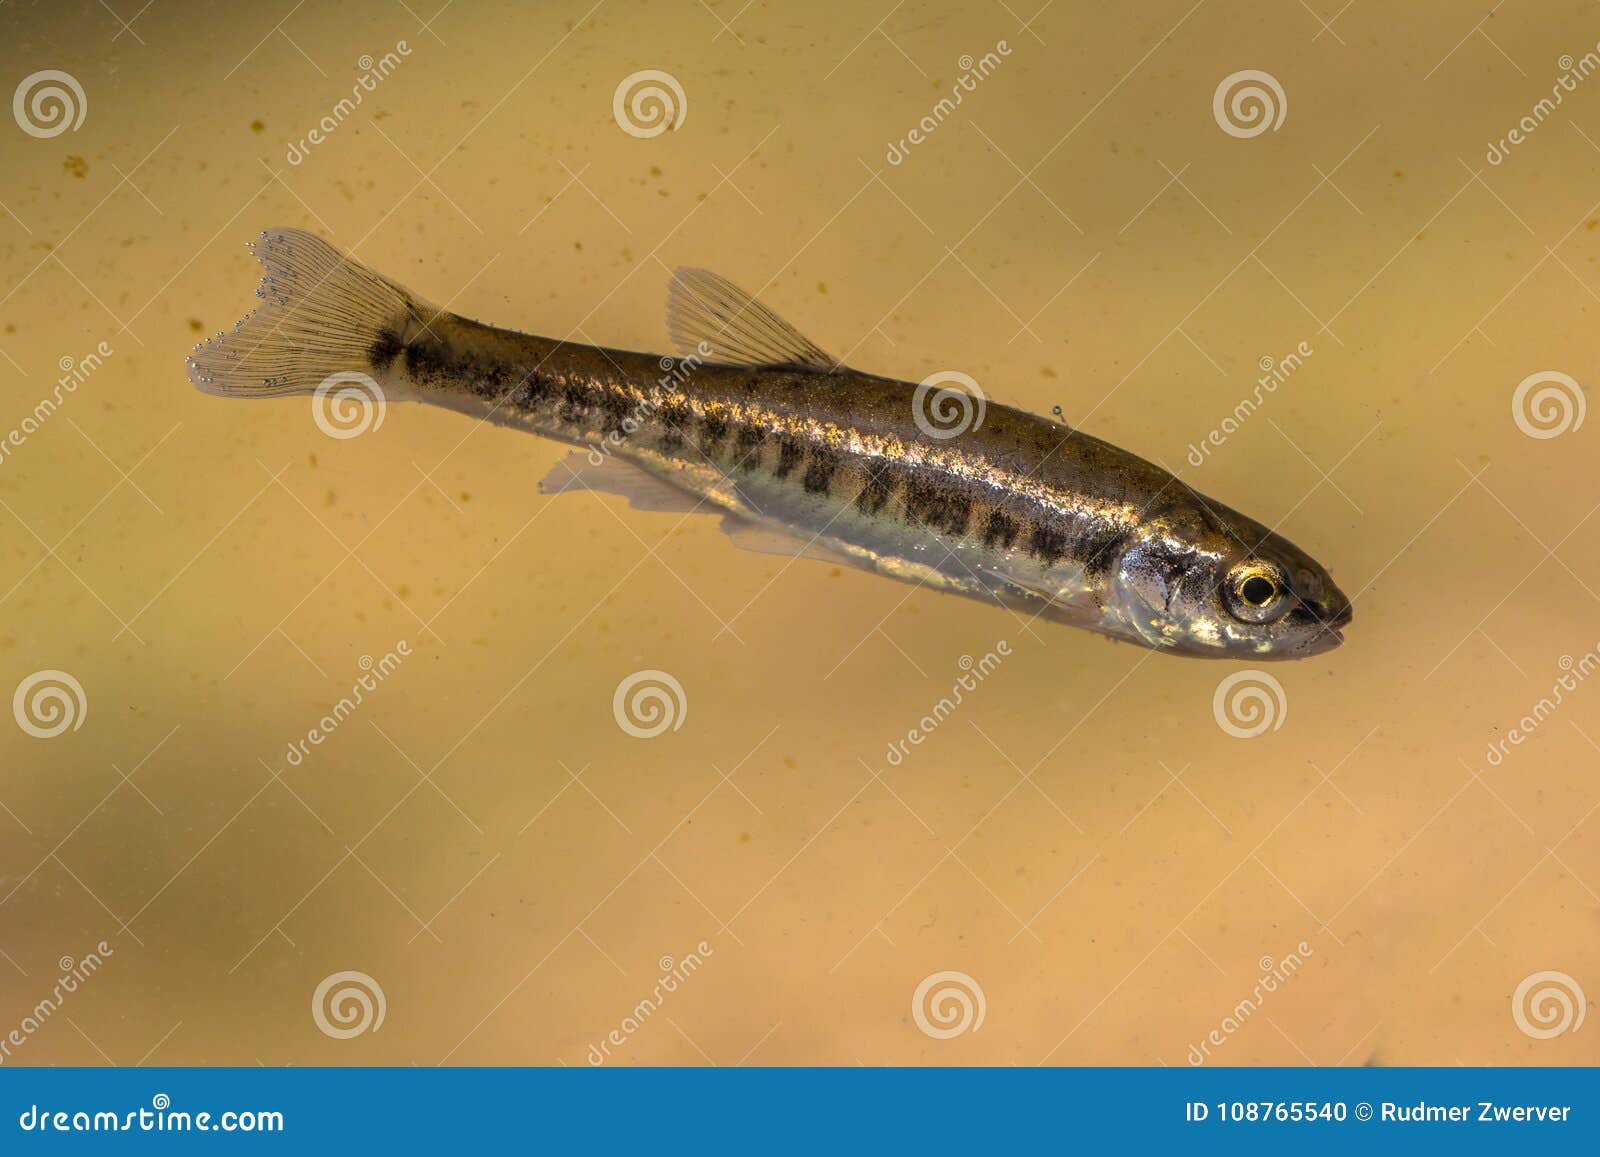 https://thumbs.dreamstime.com/z/eurasian-minnow-swimming-water-river-phoxinus-small-species-freshwater-fish-carp-family-cyprinidae-108765540.jpg